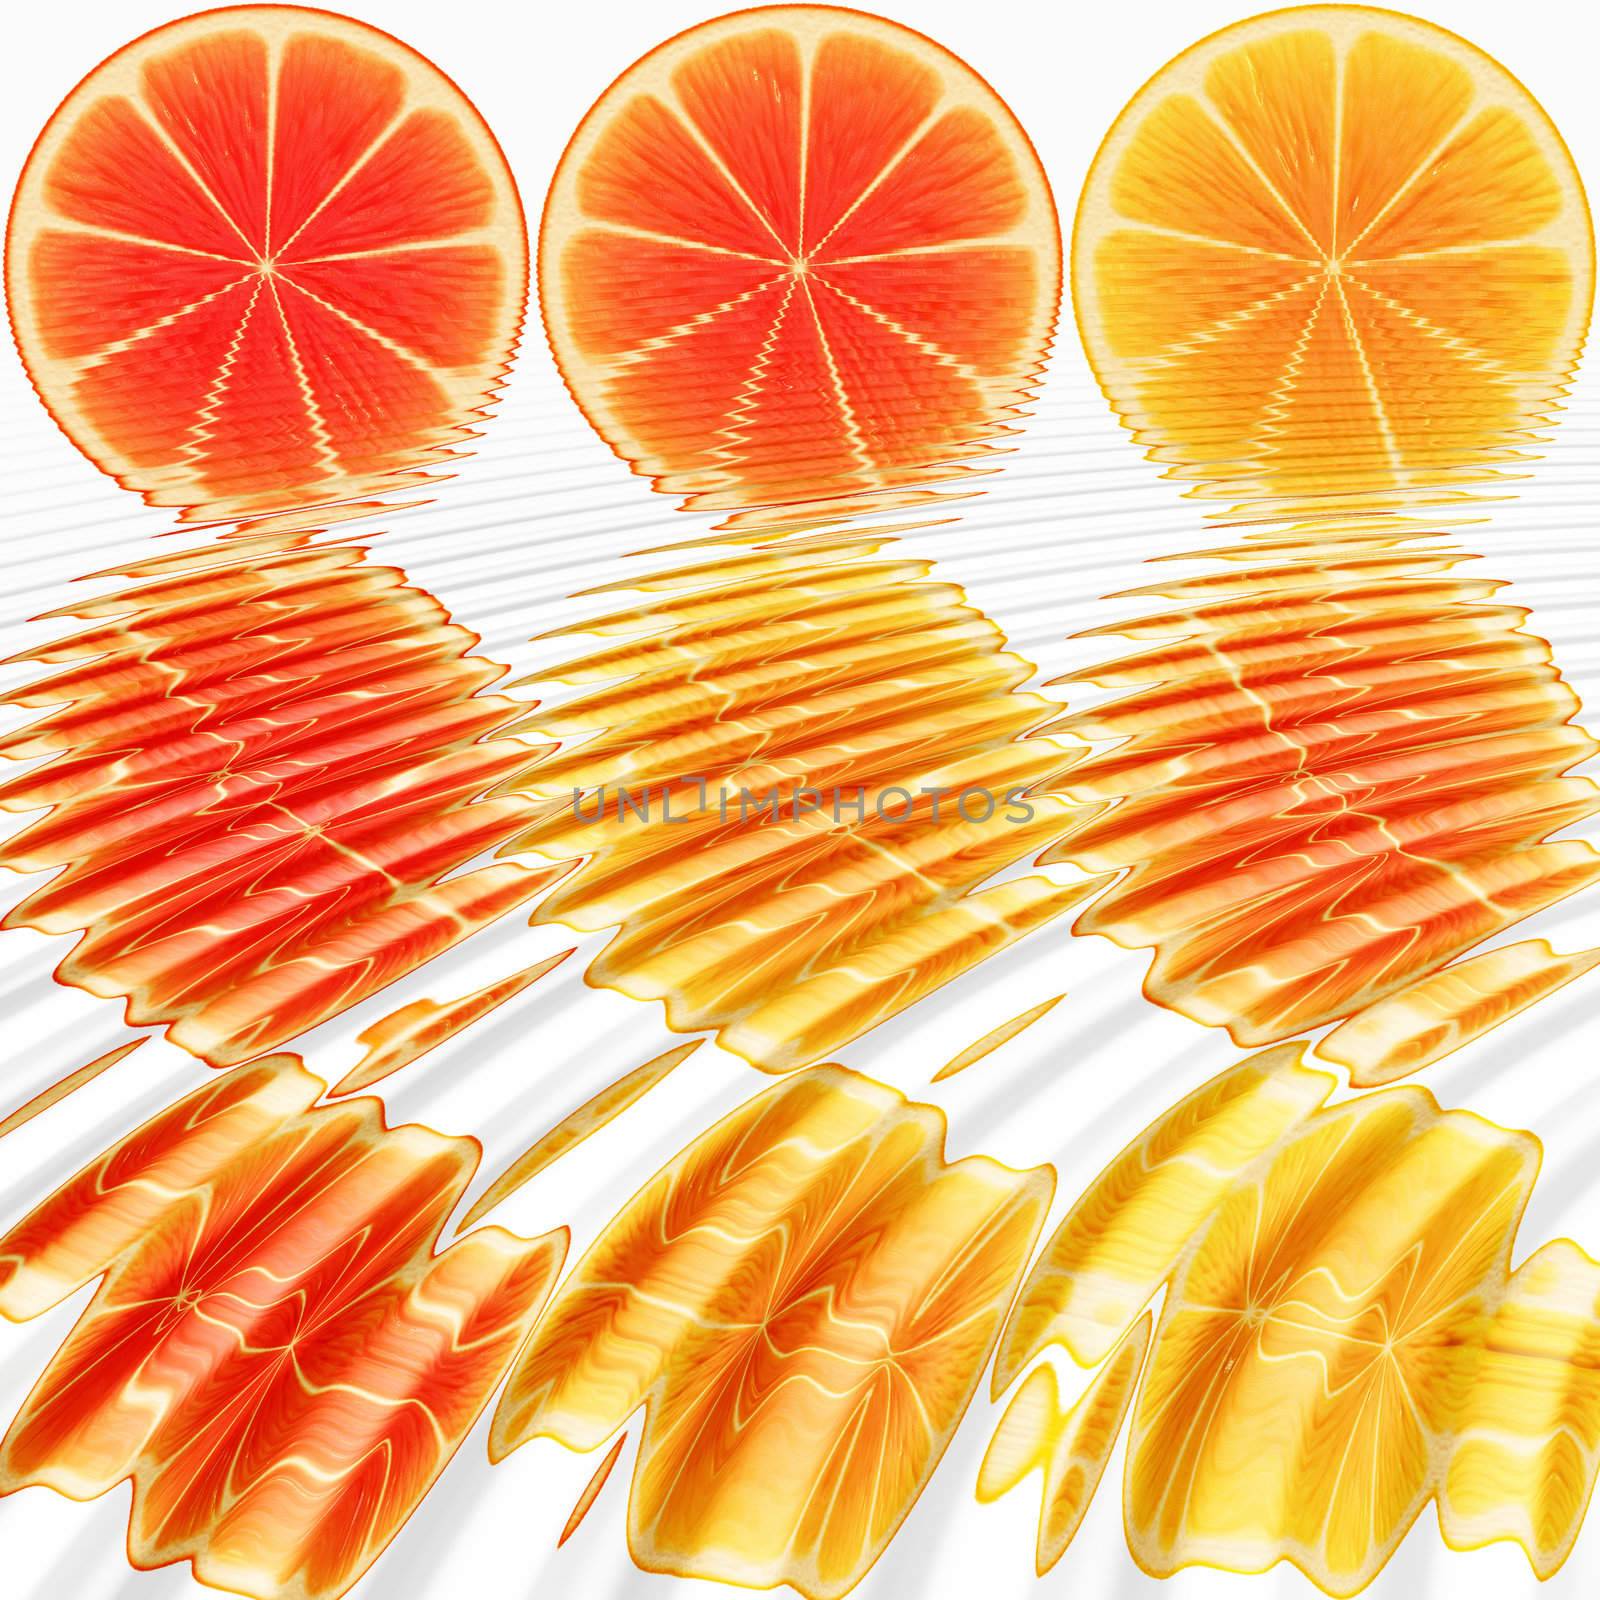 nine orange slices, submerged in water

